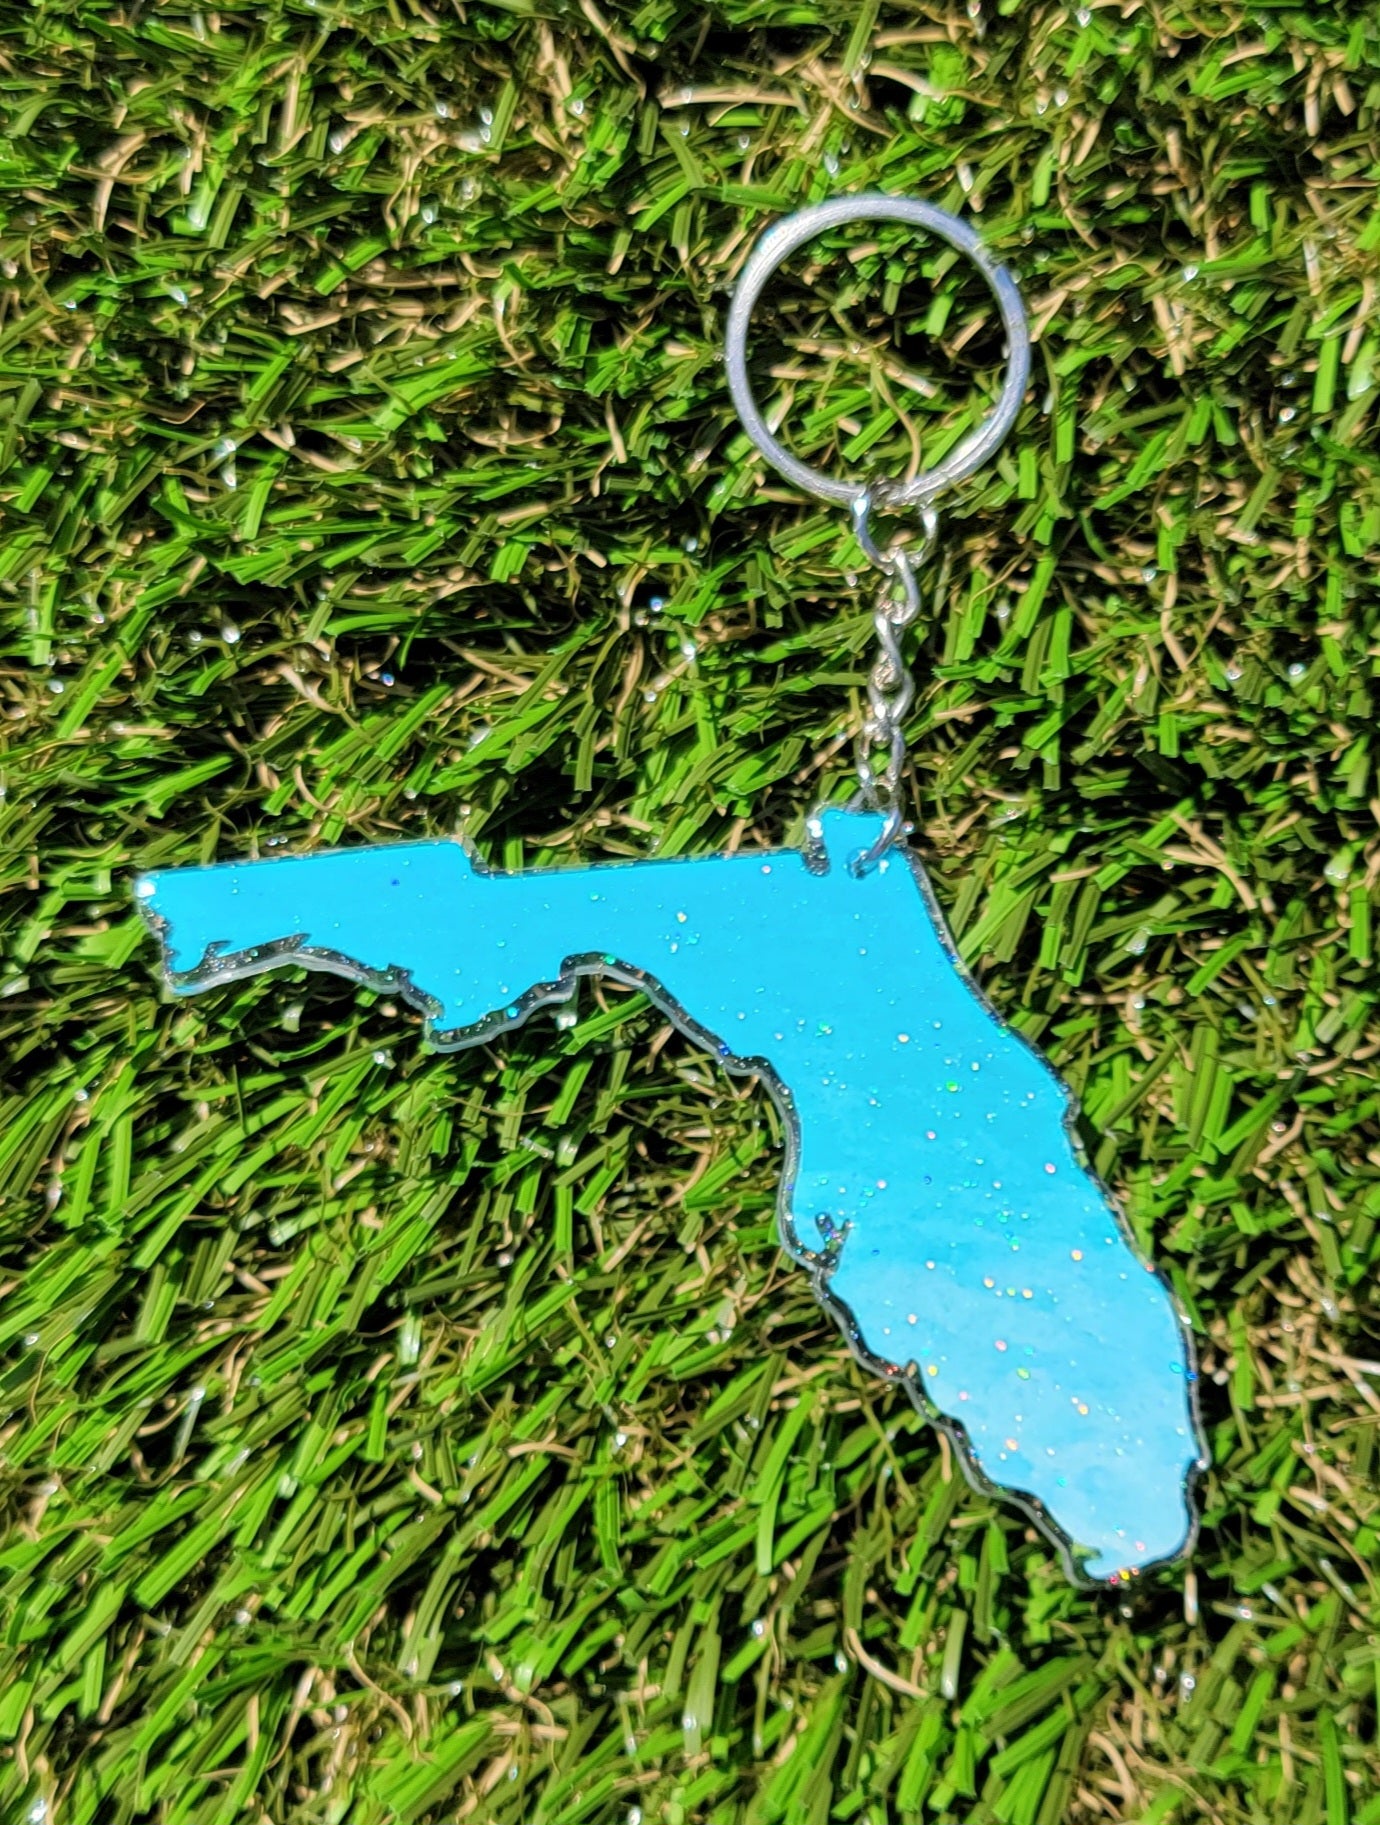 Florida Keychain